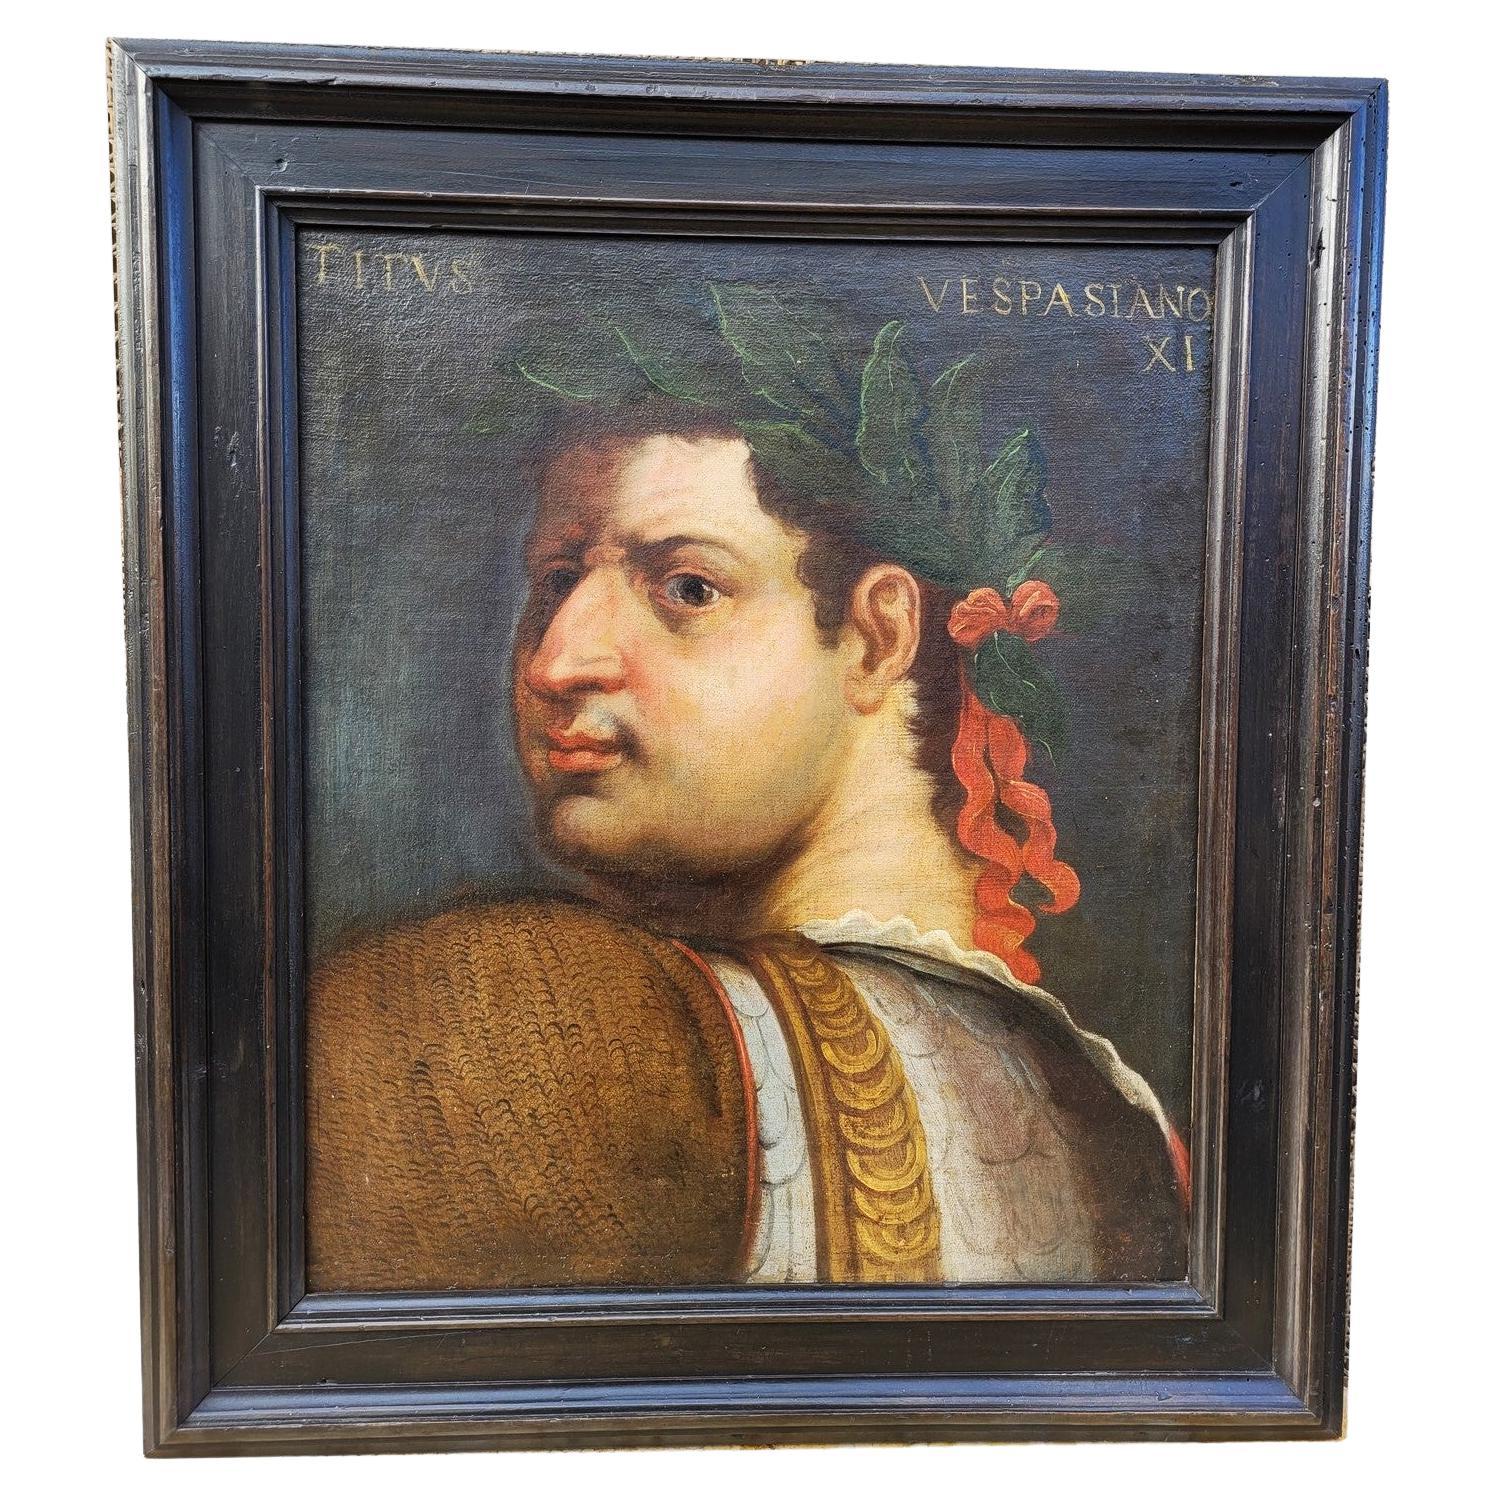 Titus Vespasian, gerahmtes Porträt, 17. Jahrhundert